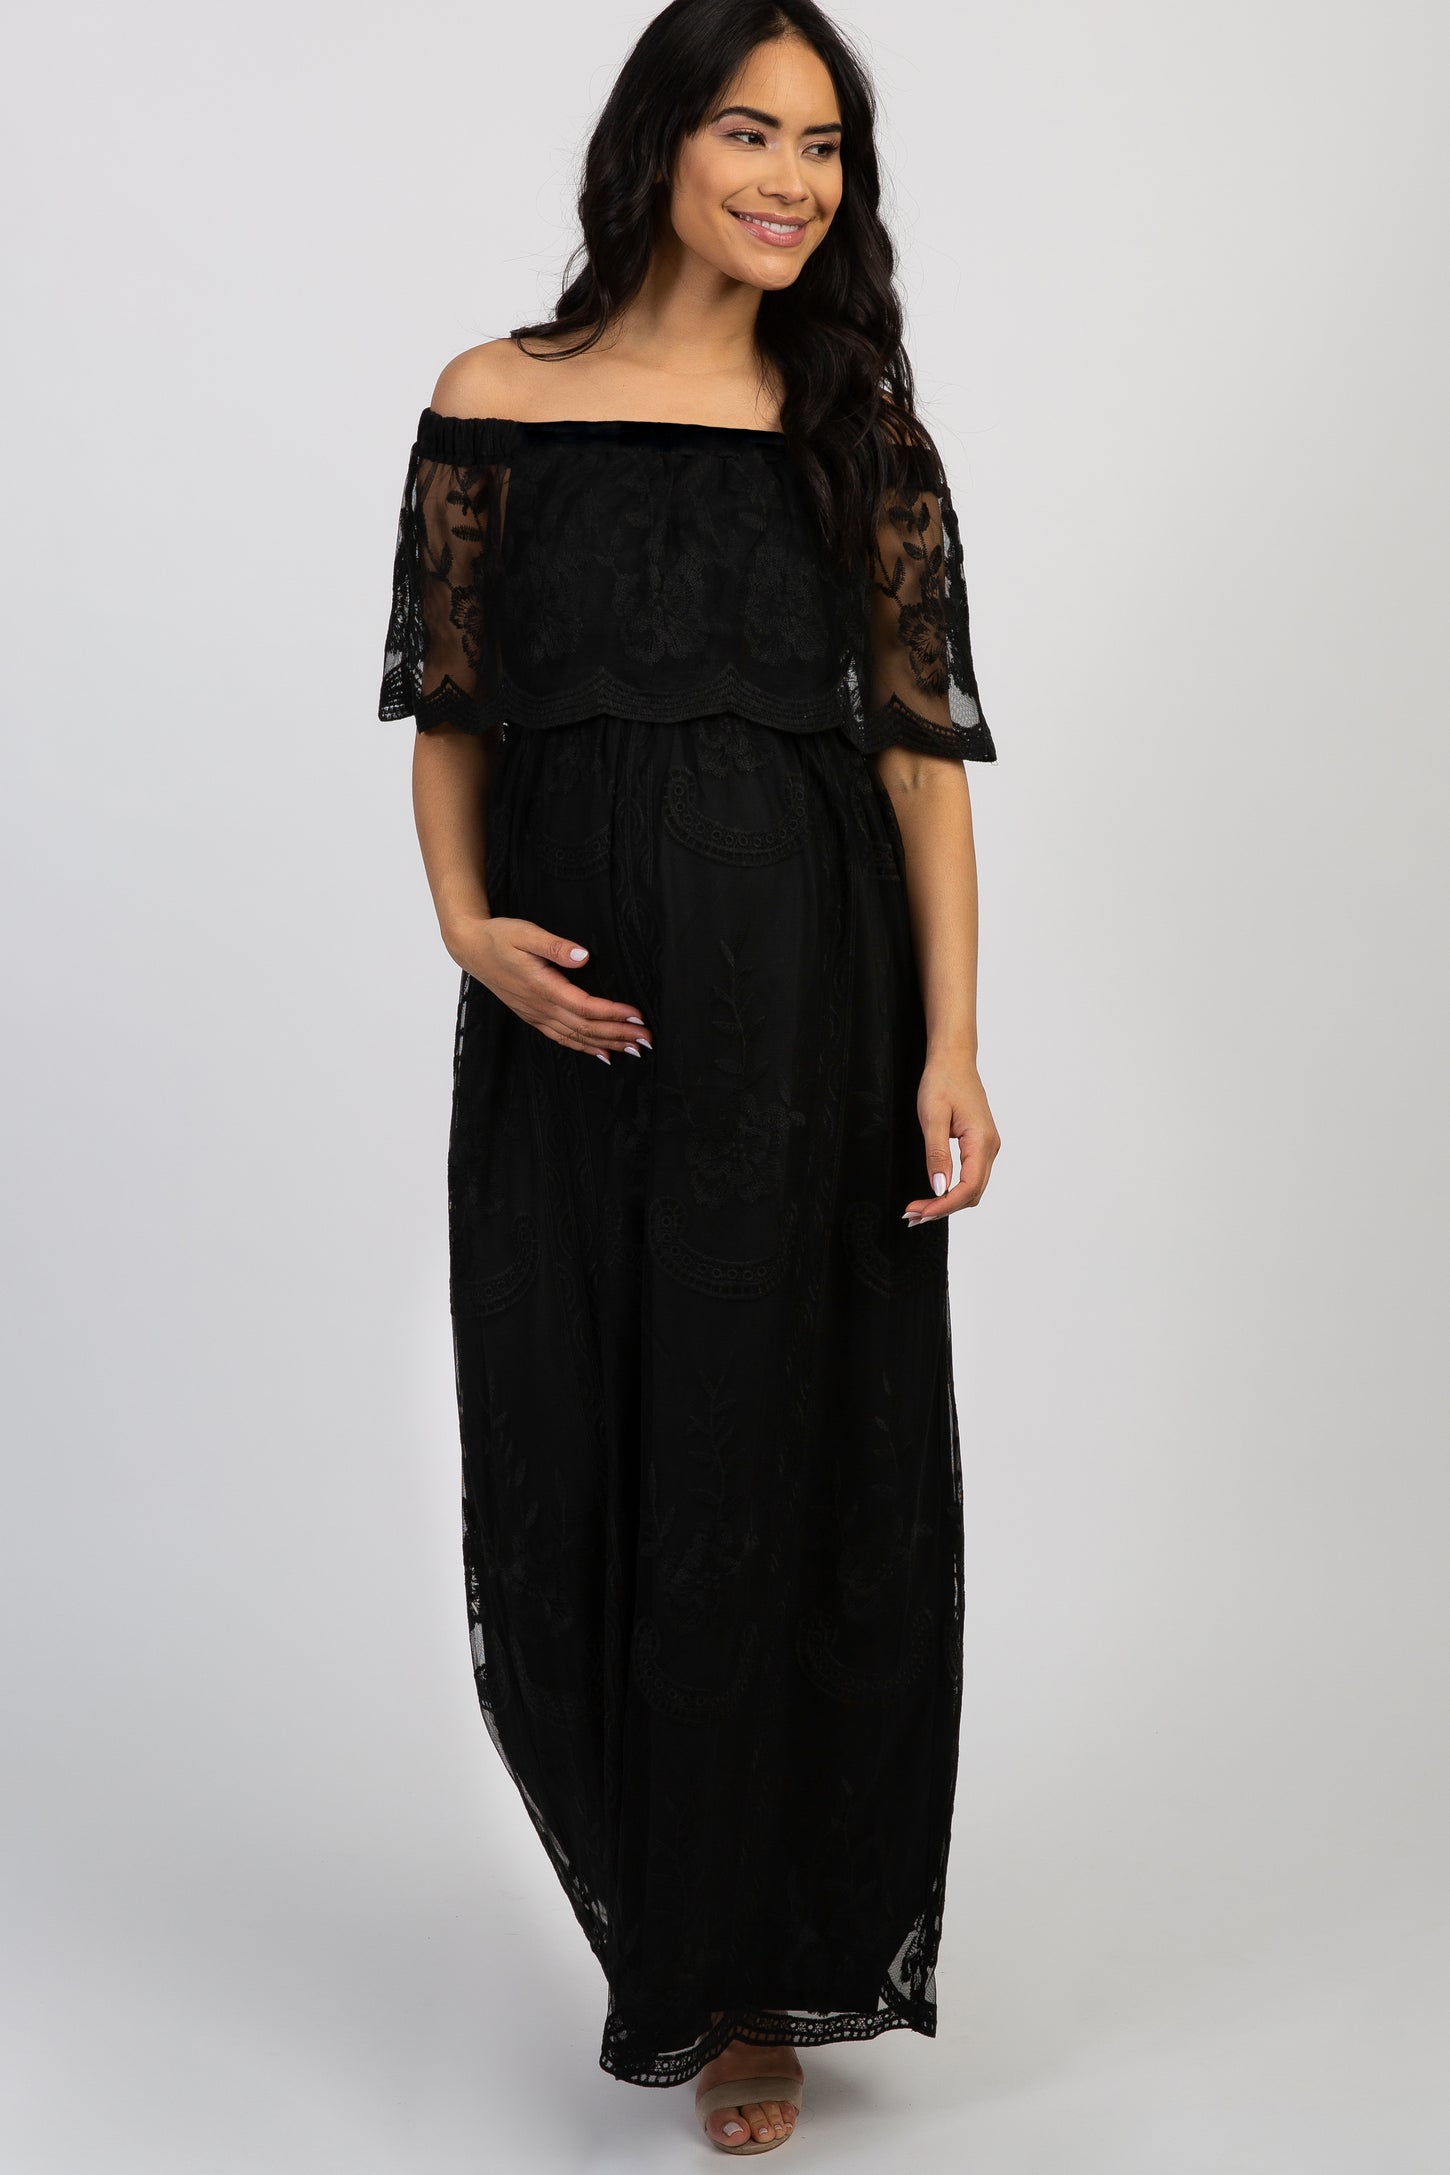 Black Lace Mesh Overlay Off Shoulder Maternity Maxi Dress